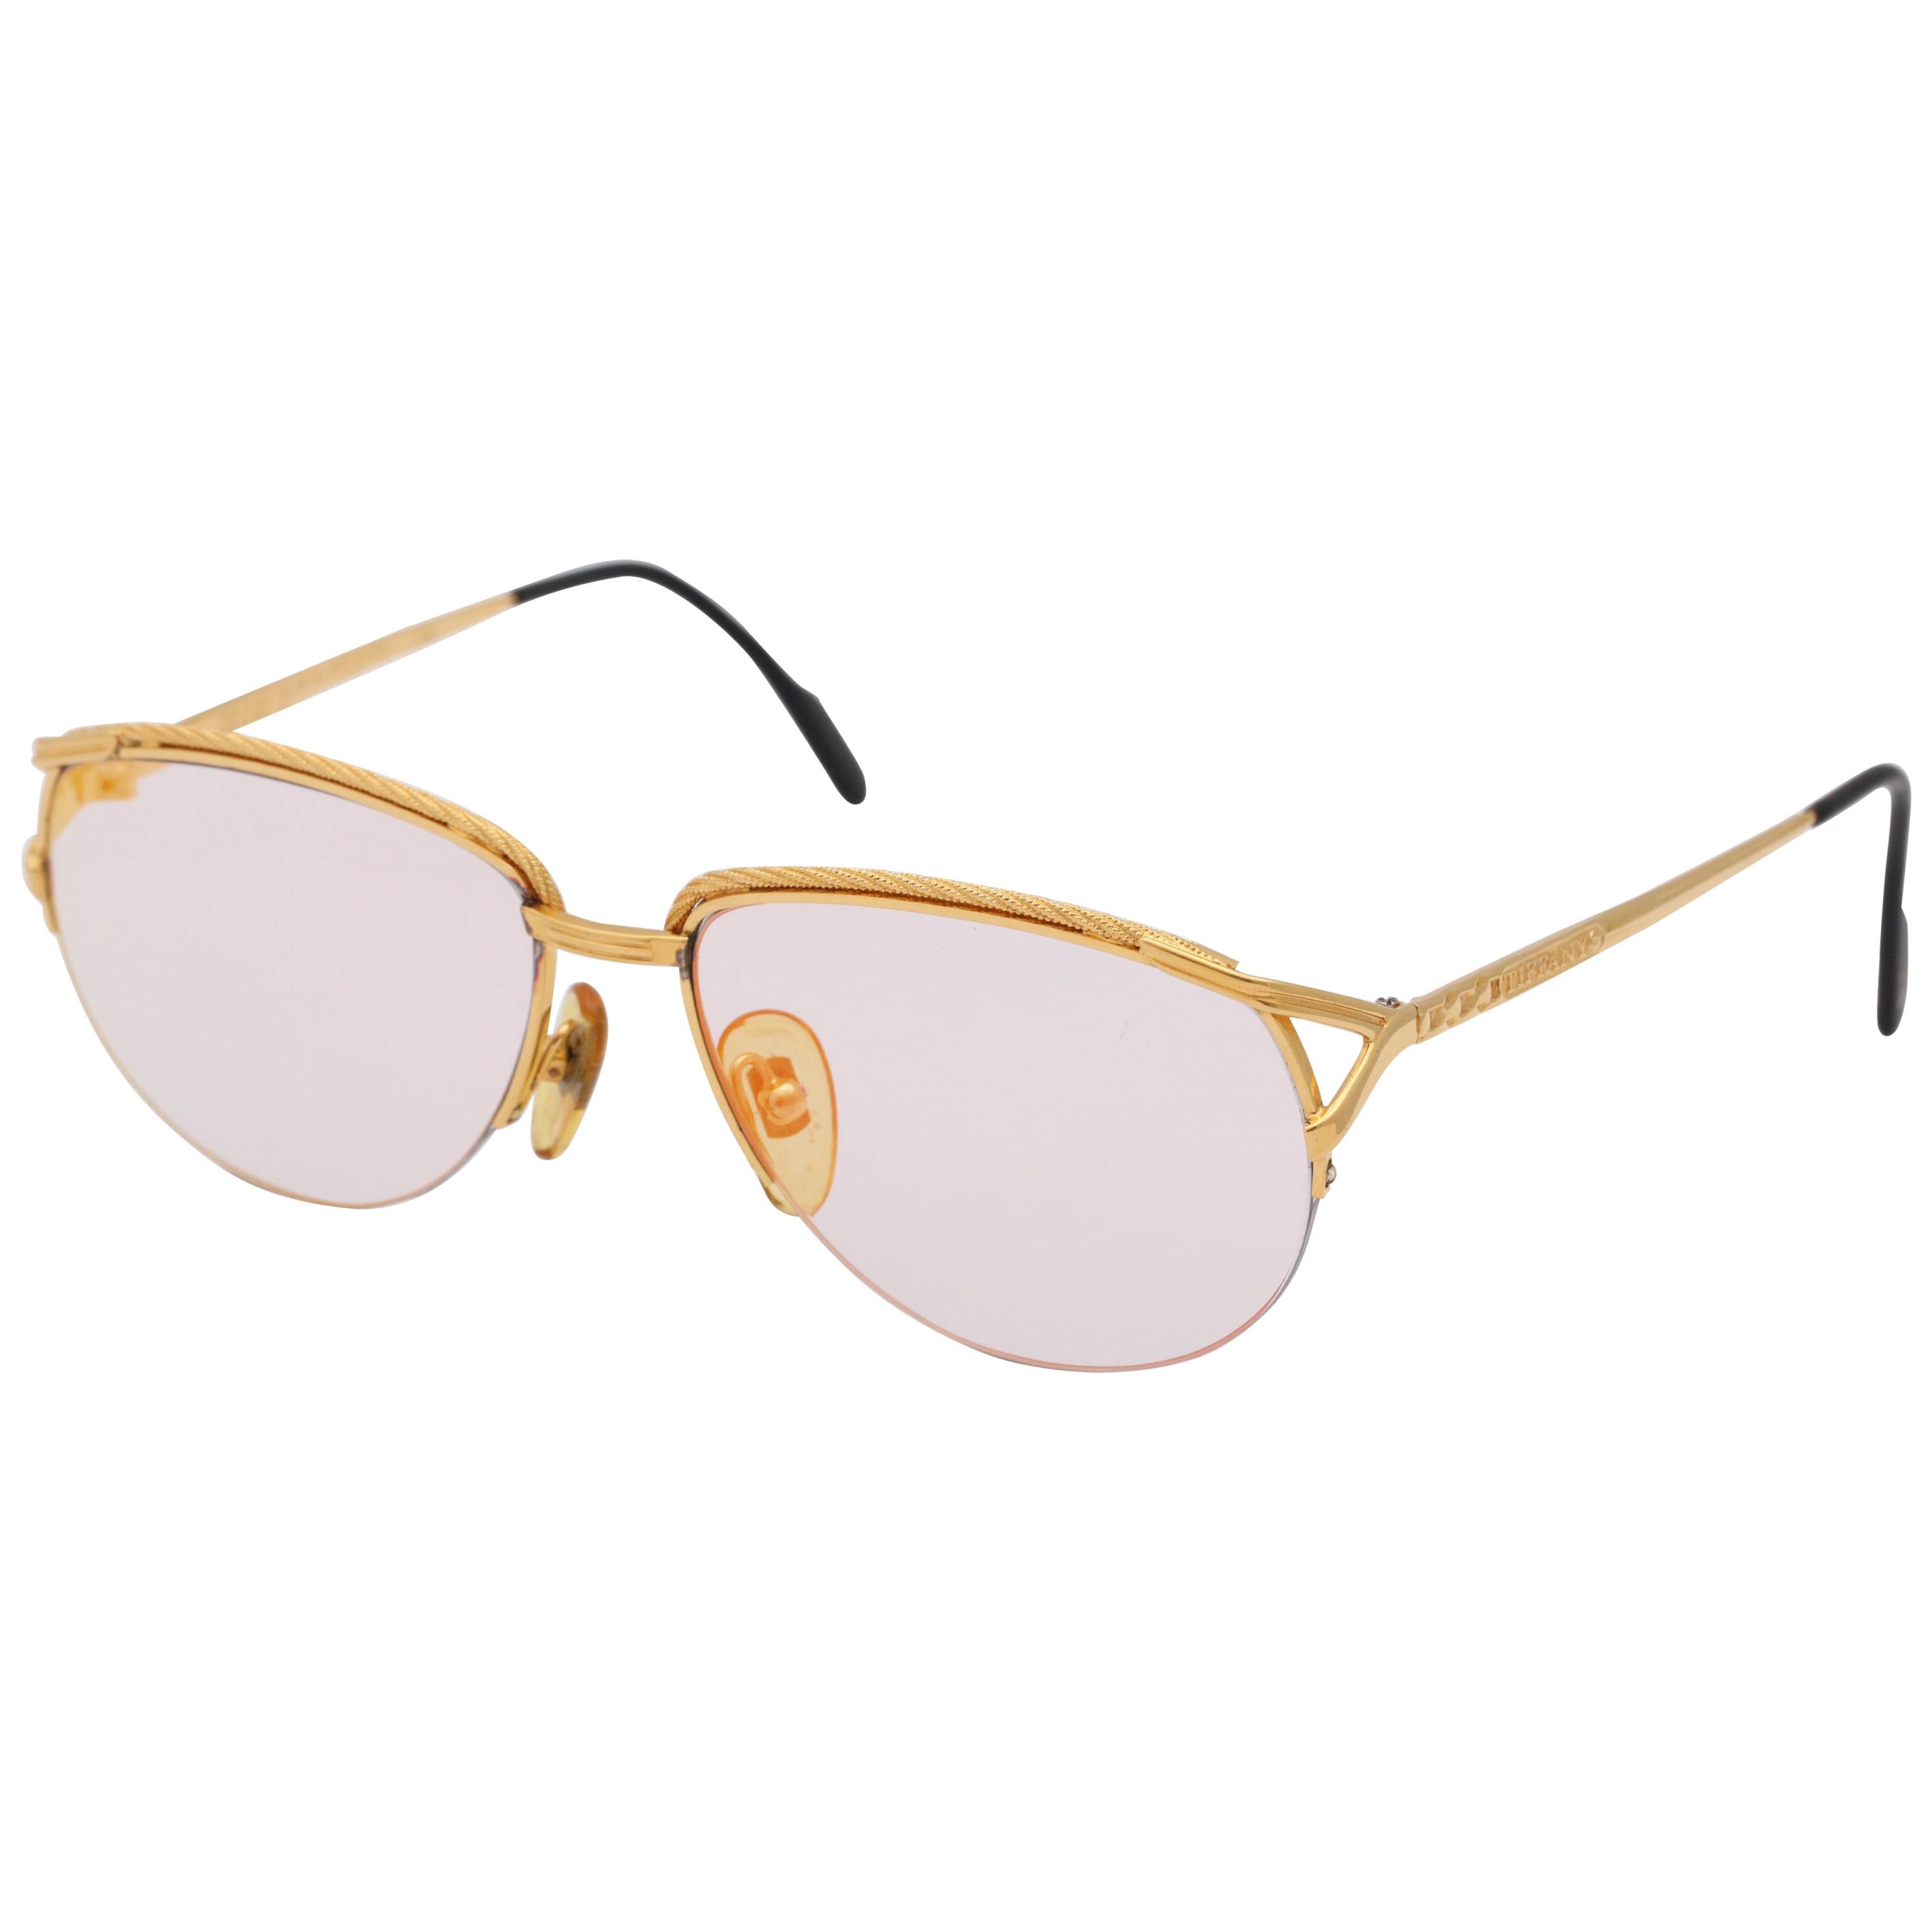 Tiffany Gold Vintage Sunglasses T318 